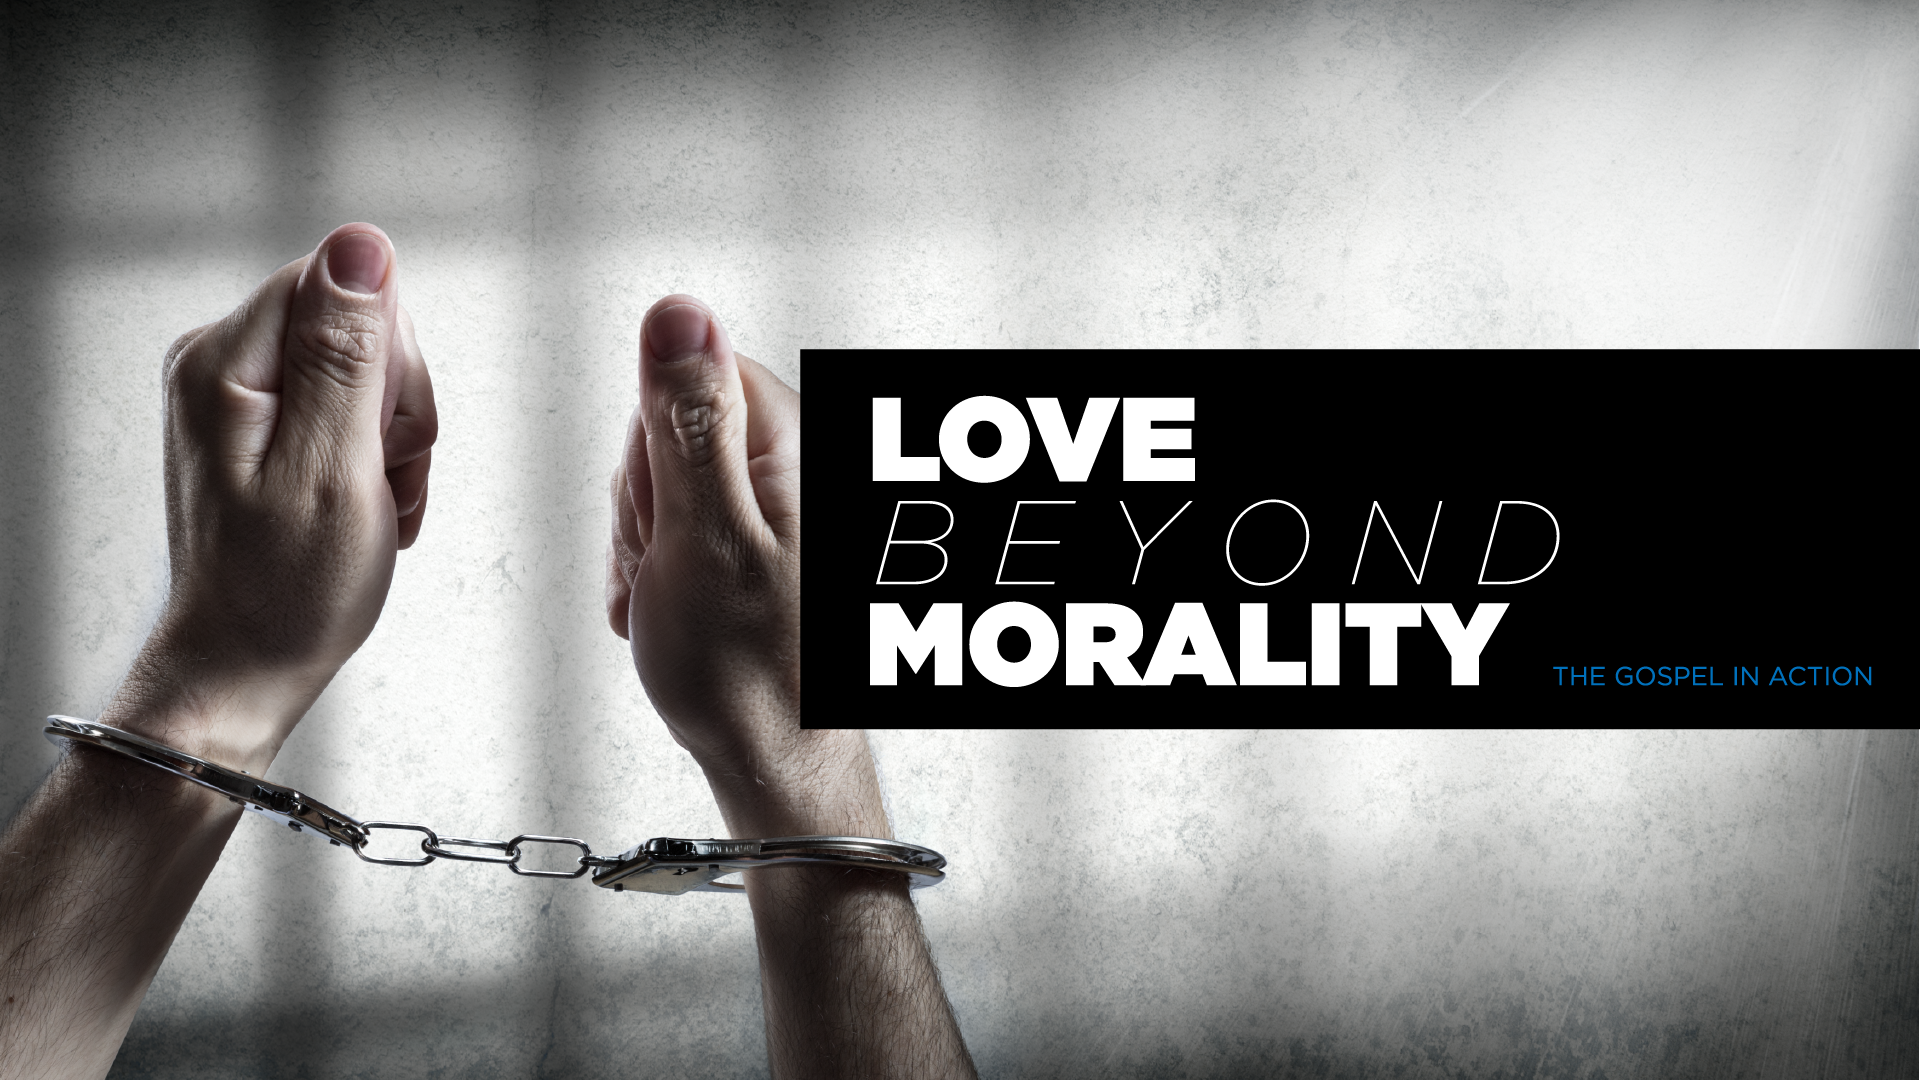 Loving beyond morality